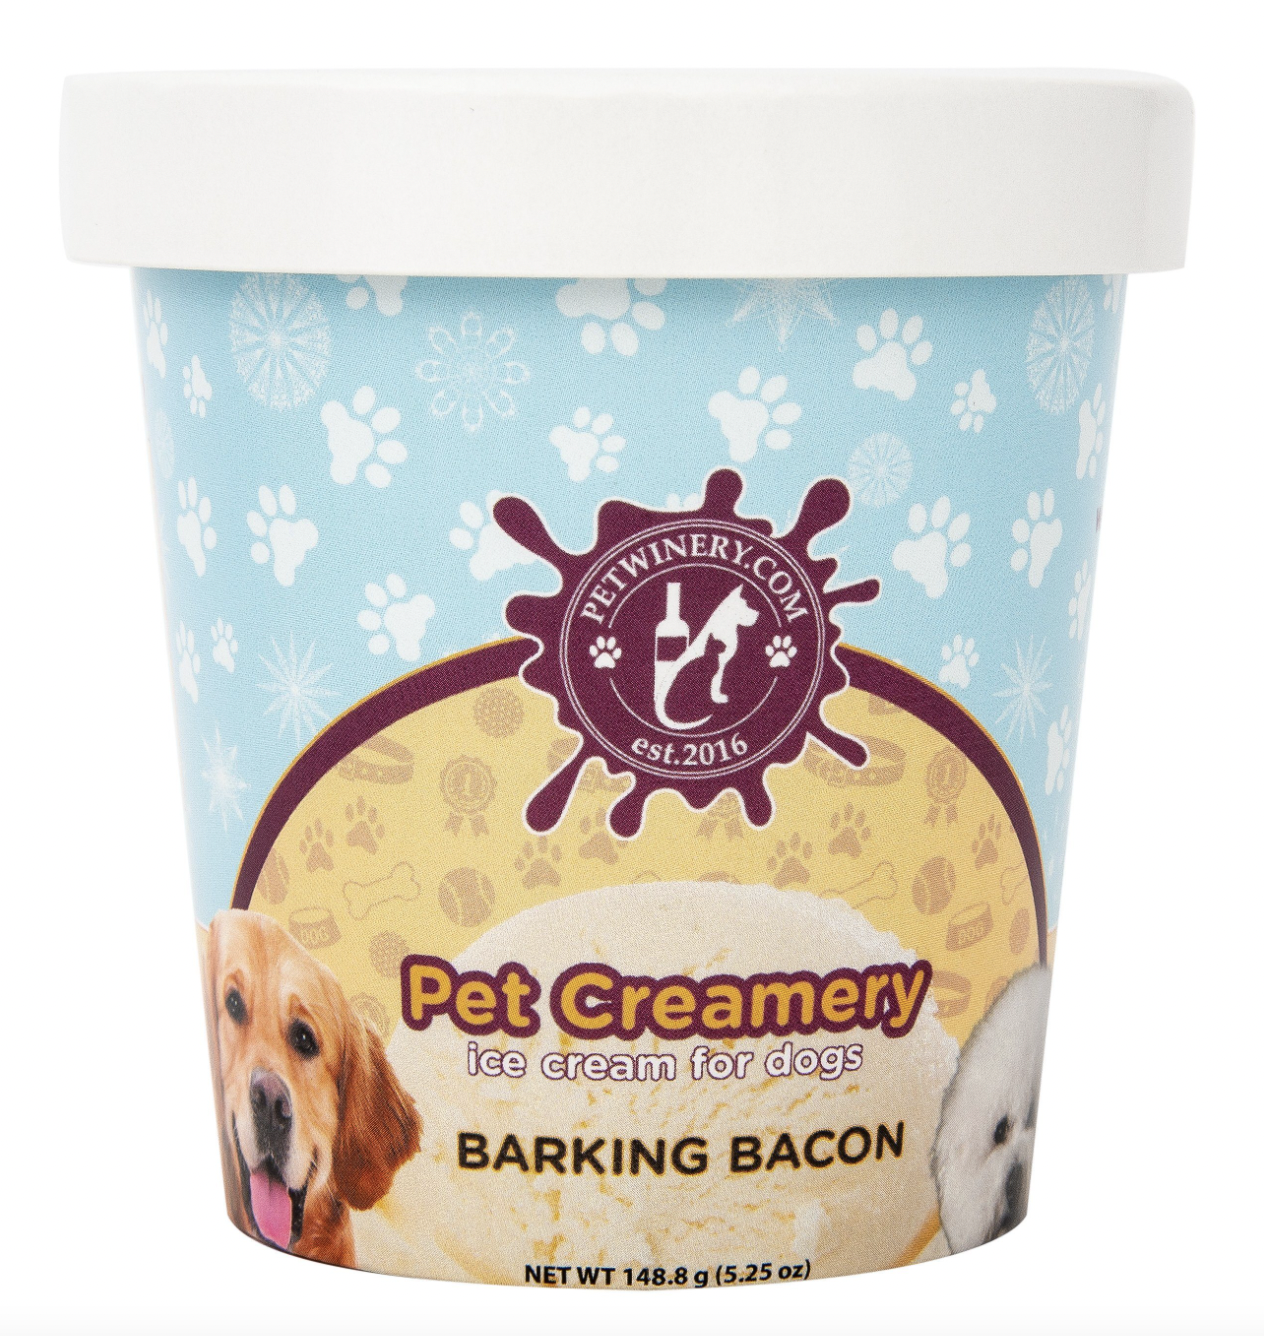 Barking Bacon Ice Cream - Pet Creamery